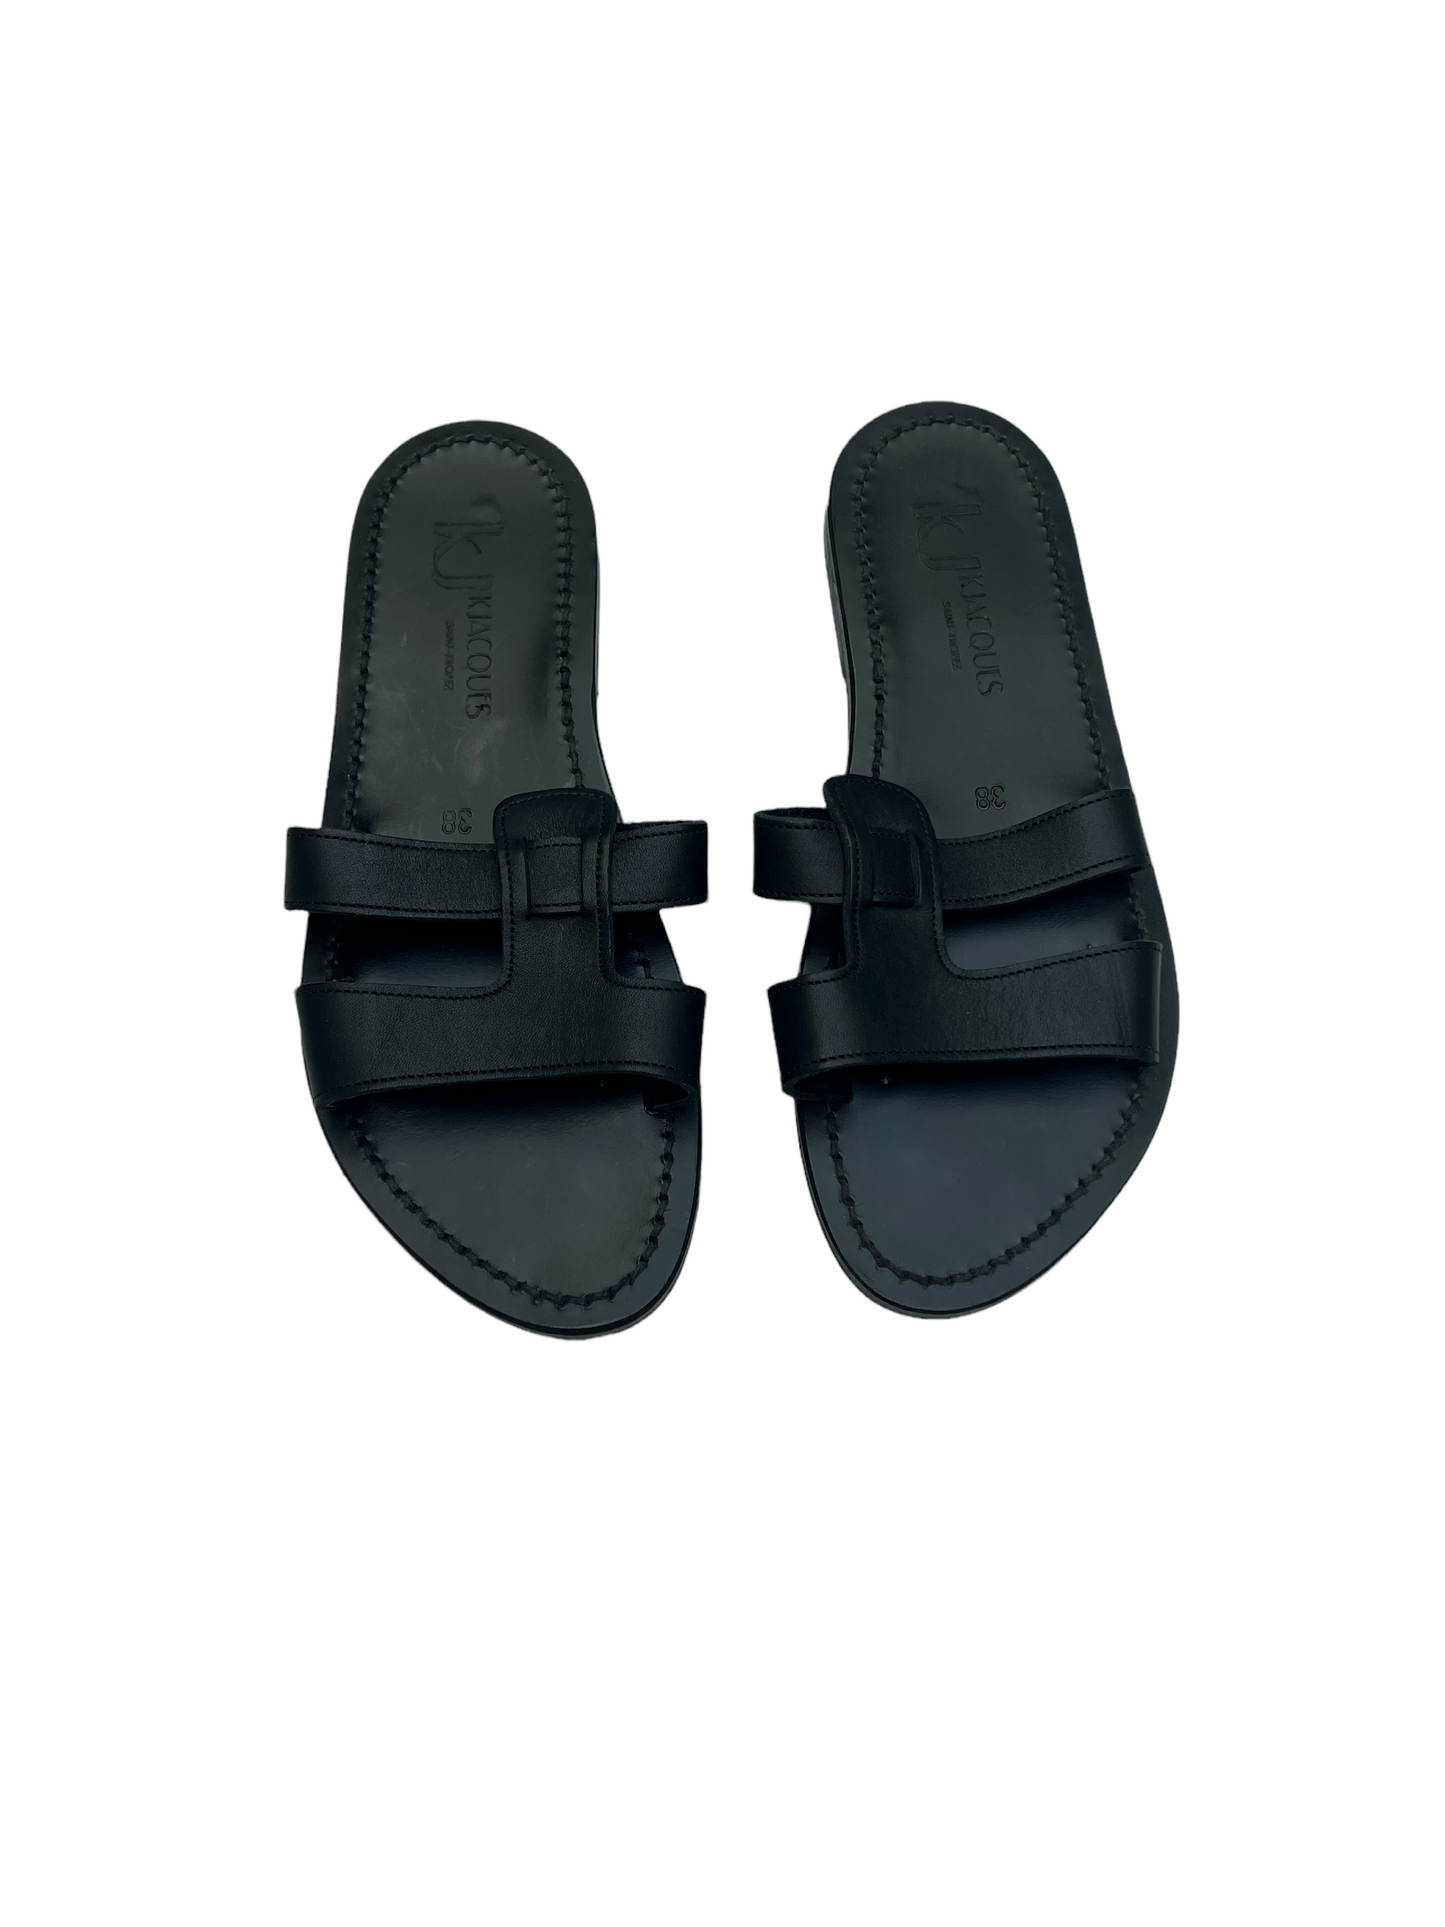 Black Leather Sandals - 7